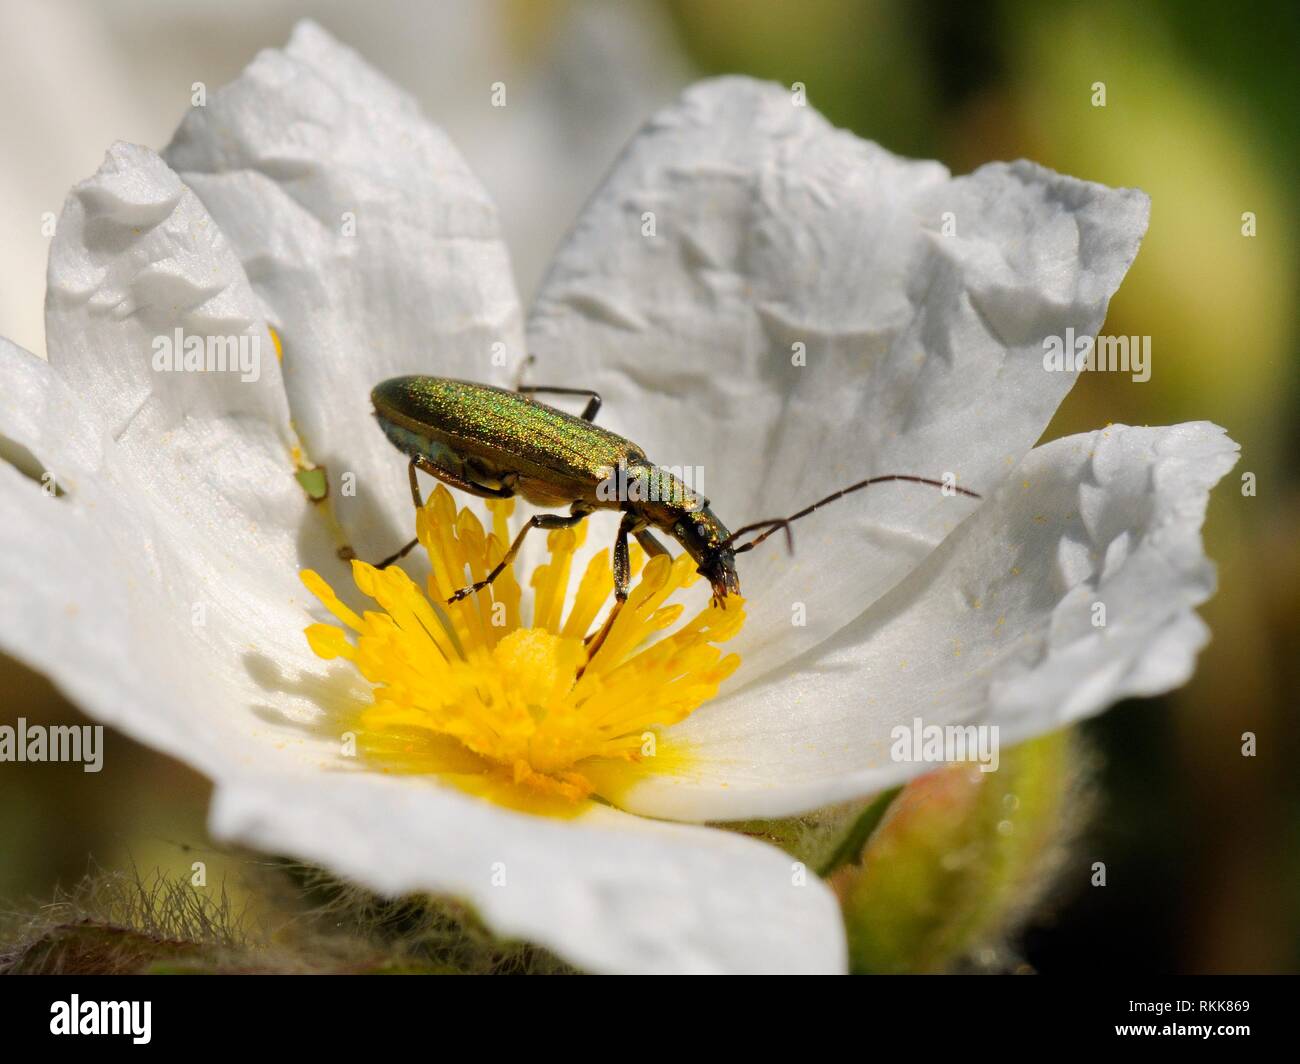 False blister beetle (Chrysanthia viridissima) pollen feeding on Rock rose (Cistus sp.) flower, Port Cros Island National Park, France. Stock Photo